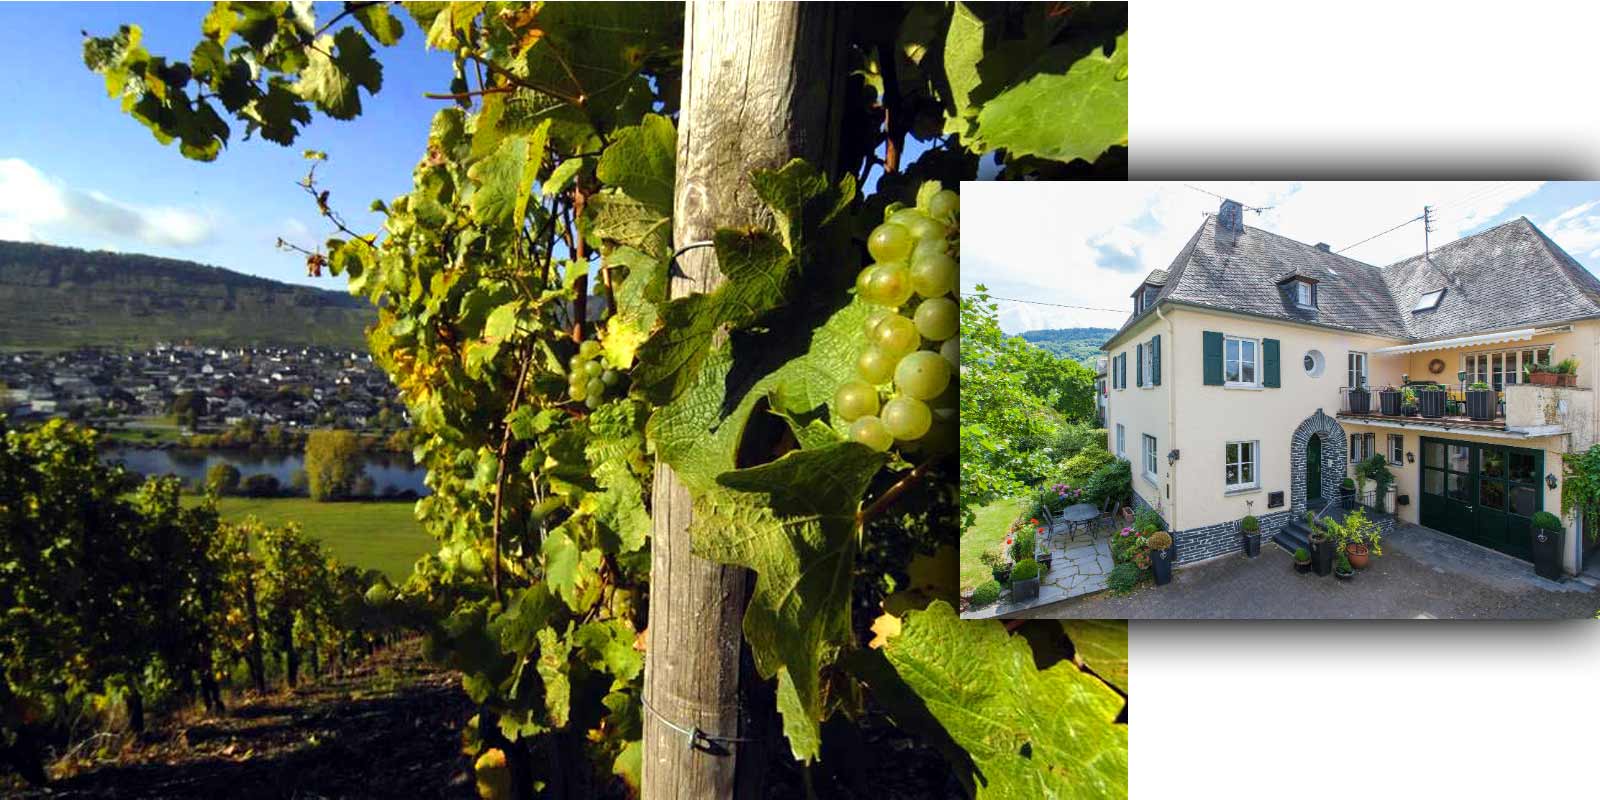 Grans-Fassian saraphanesi - Moselle bagcilik bolgesi Gerhard Grans, 1982 yilinda bagcilik isini babasi Matthias`tan devralarak 4 hektarlik bag alanini bugun 9,5 hektara cikardi.Bunun %88`i Riesling, %10`u Pinot Blanc ve %2`si Pinot Gris ekili. Sarap imalathanesinin en iyi yerleri ayni zamanda siniflandirilmis yerlerdir; bunlar en yuksek yetistirme kategorisinde siniflandirilir.